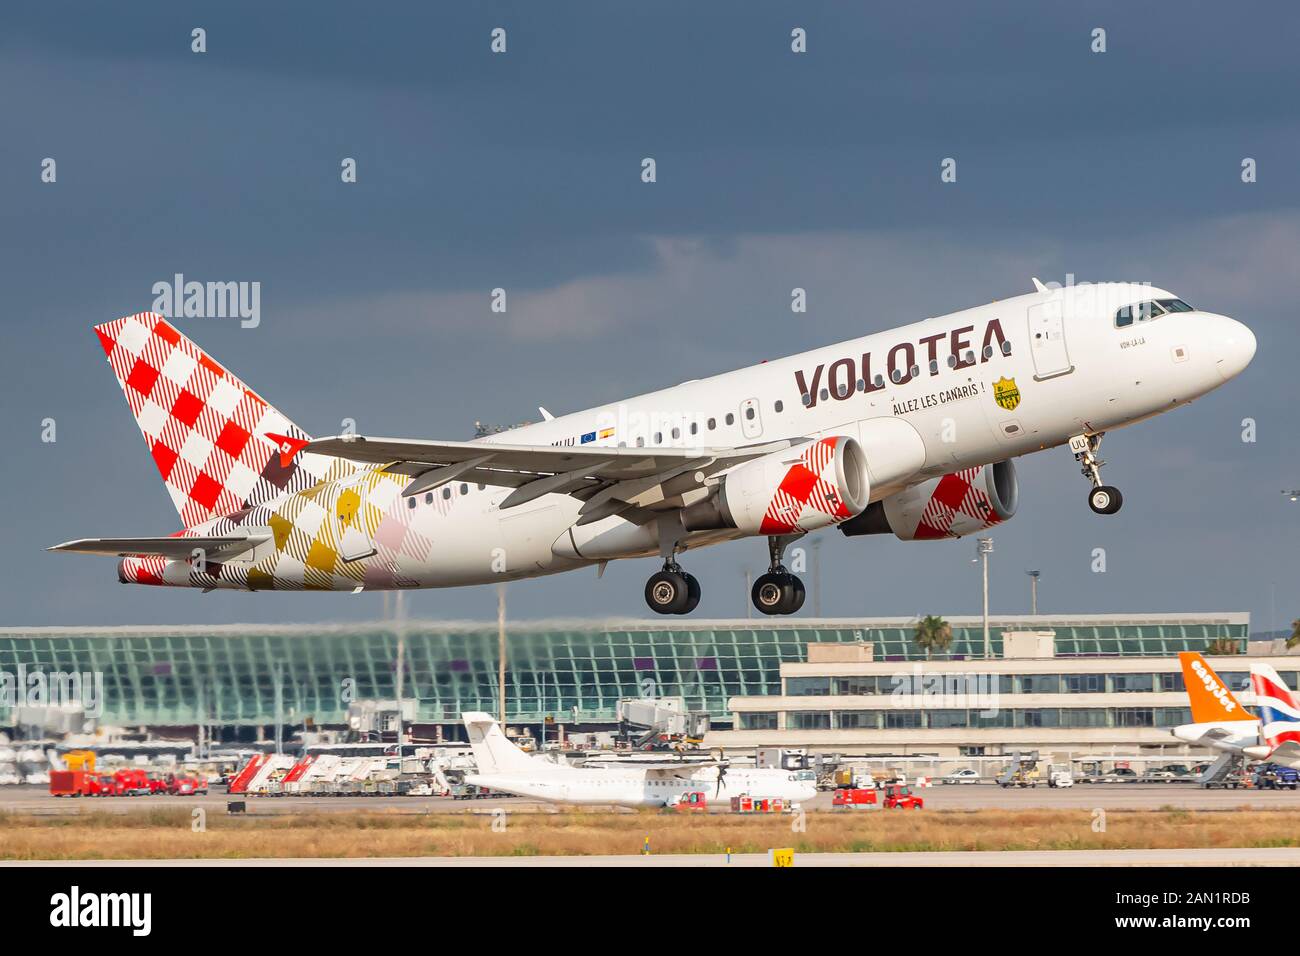 Palma de Mallorca, España - 21 de julio de 2018: Volotea Airbus A319 avión en el aeropuerto de Palma de Mallorca (PMI) en España. Airbus es un fabricante de aviones Foto de stock